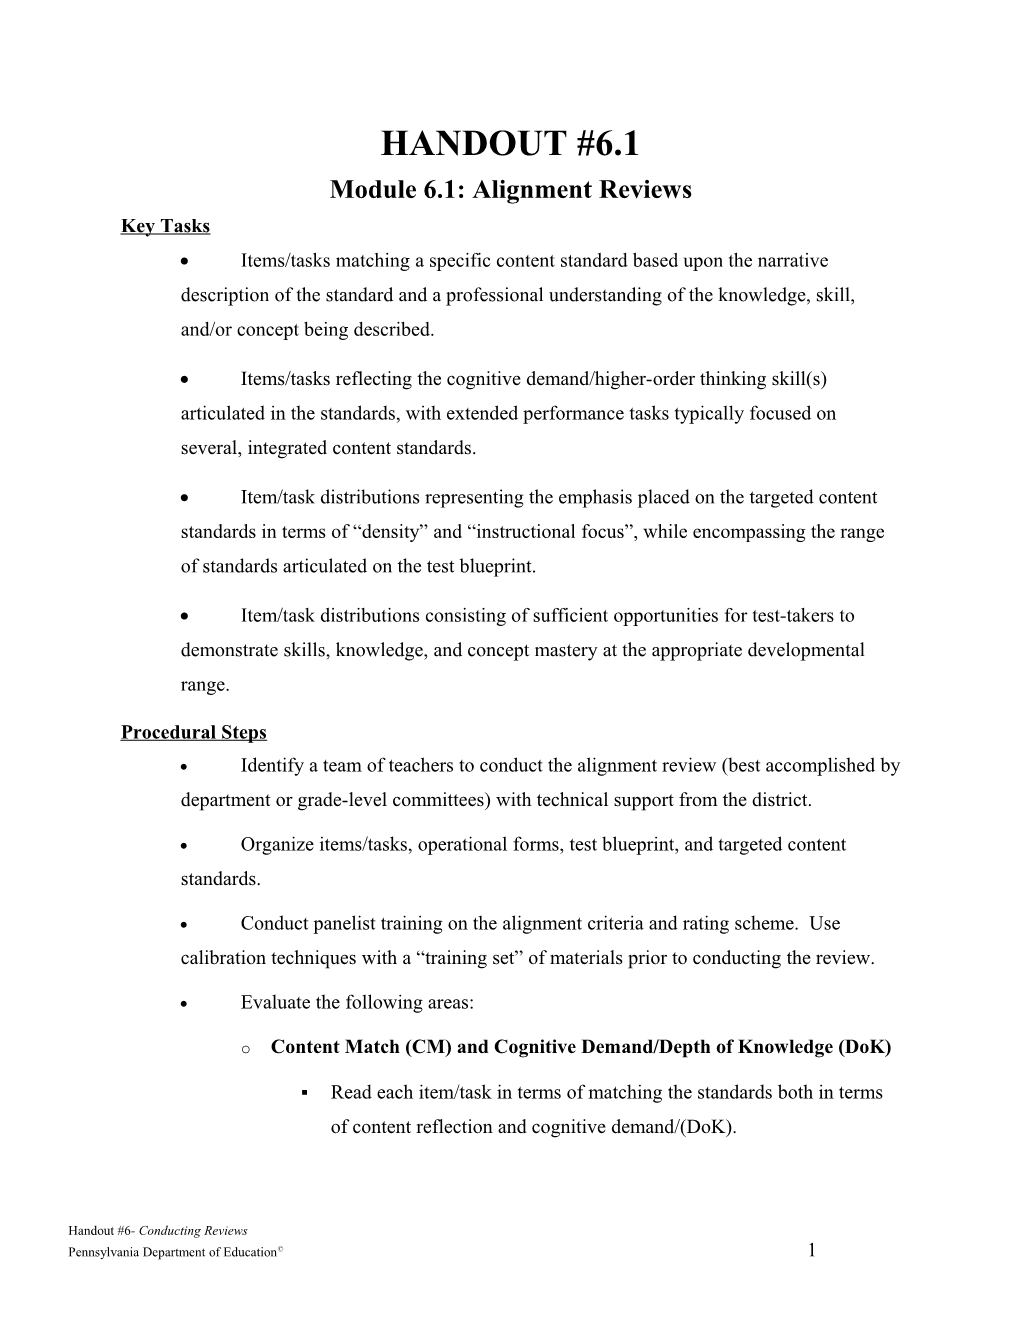 Module 6.1: Alignment Reviews